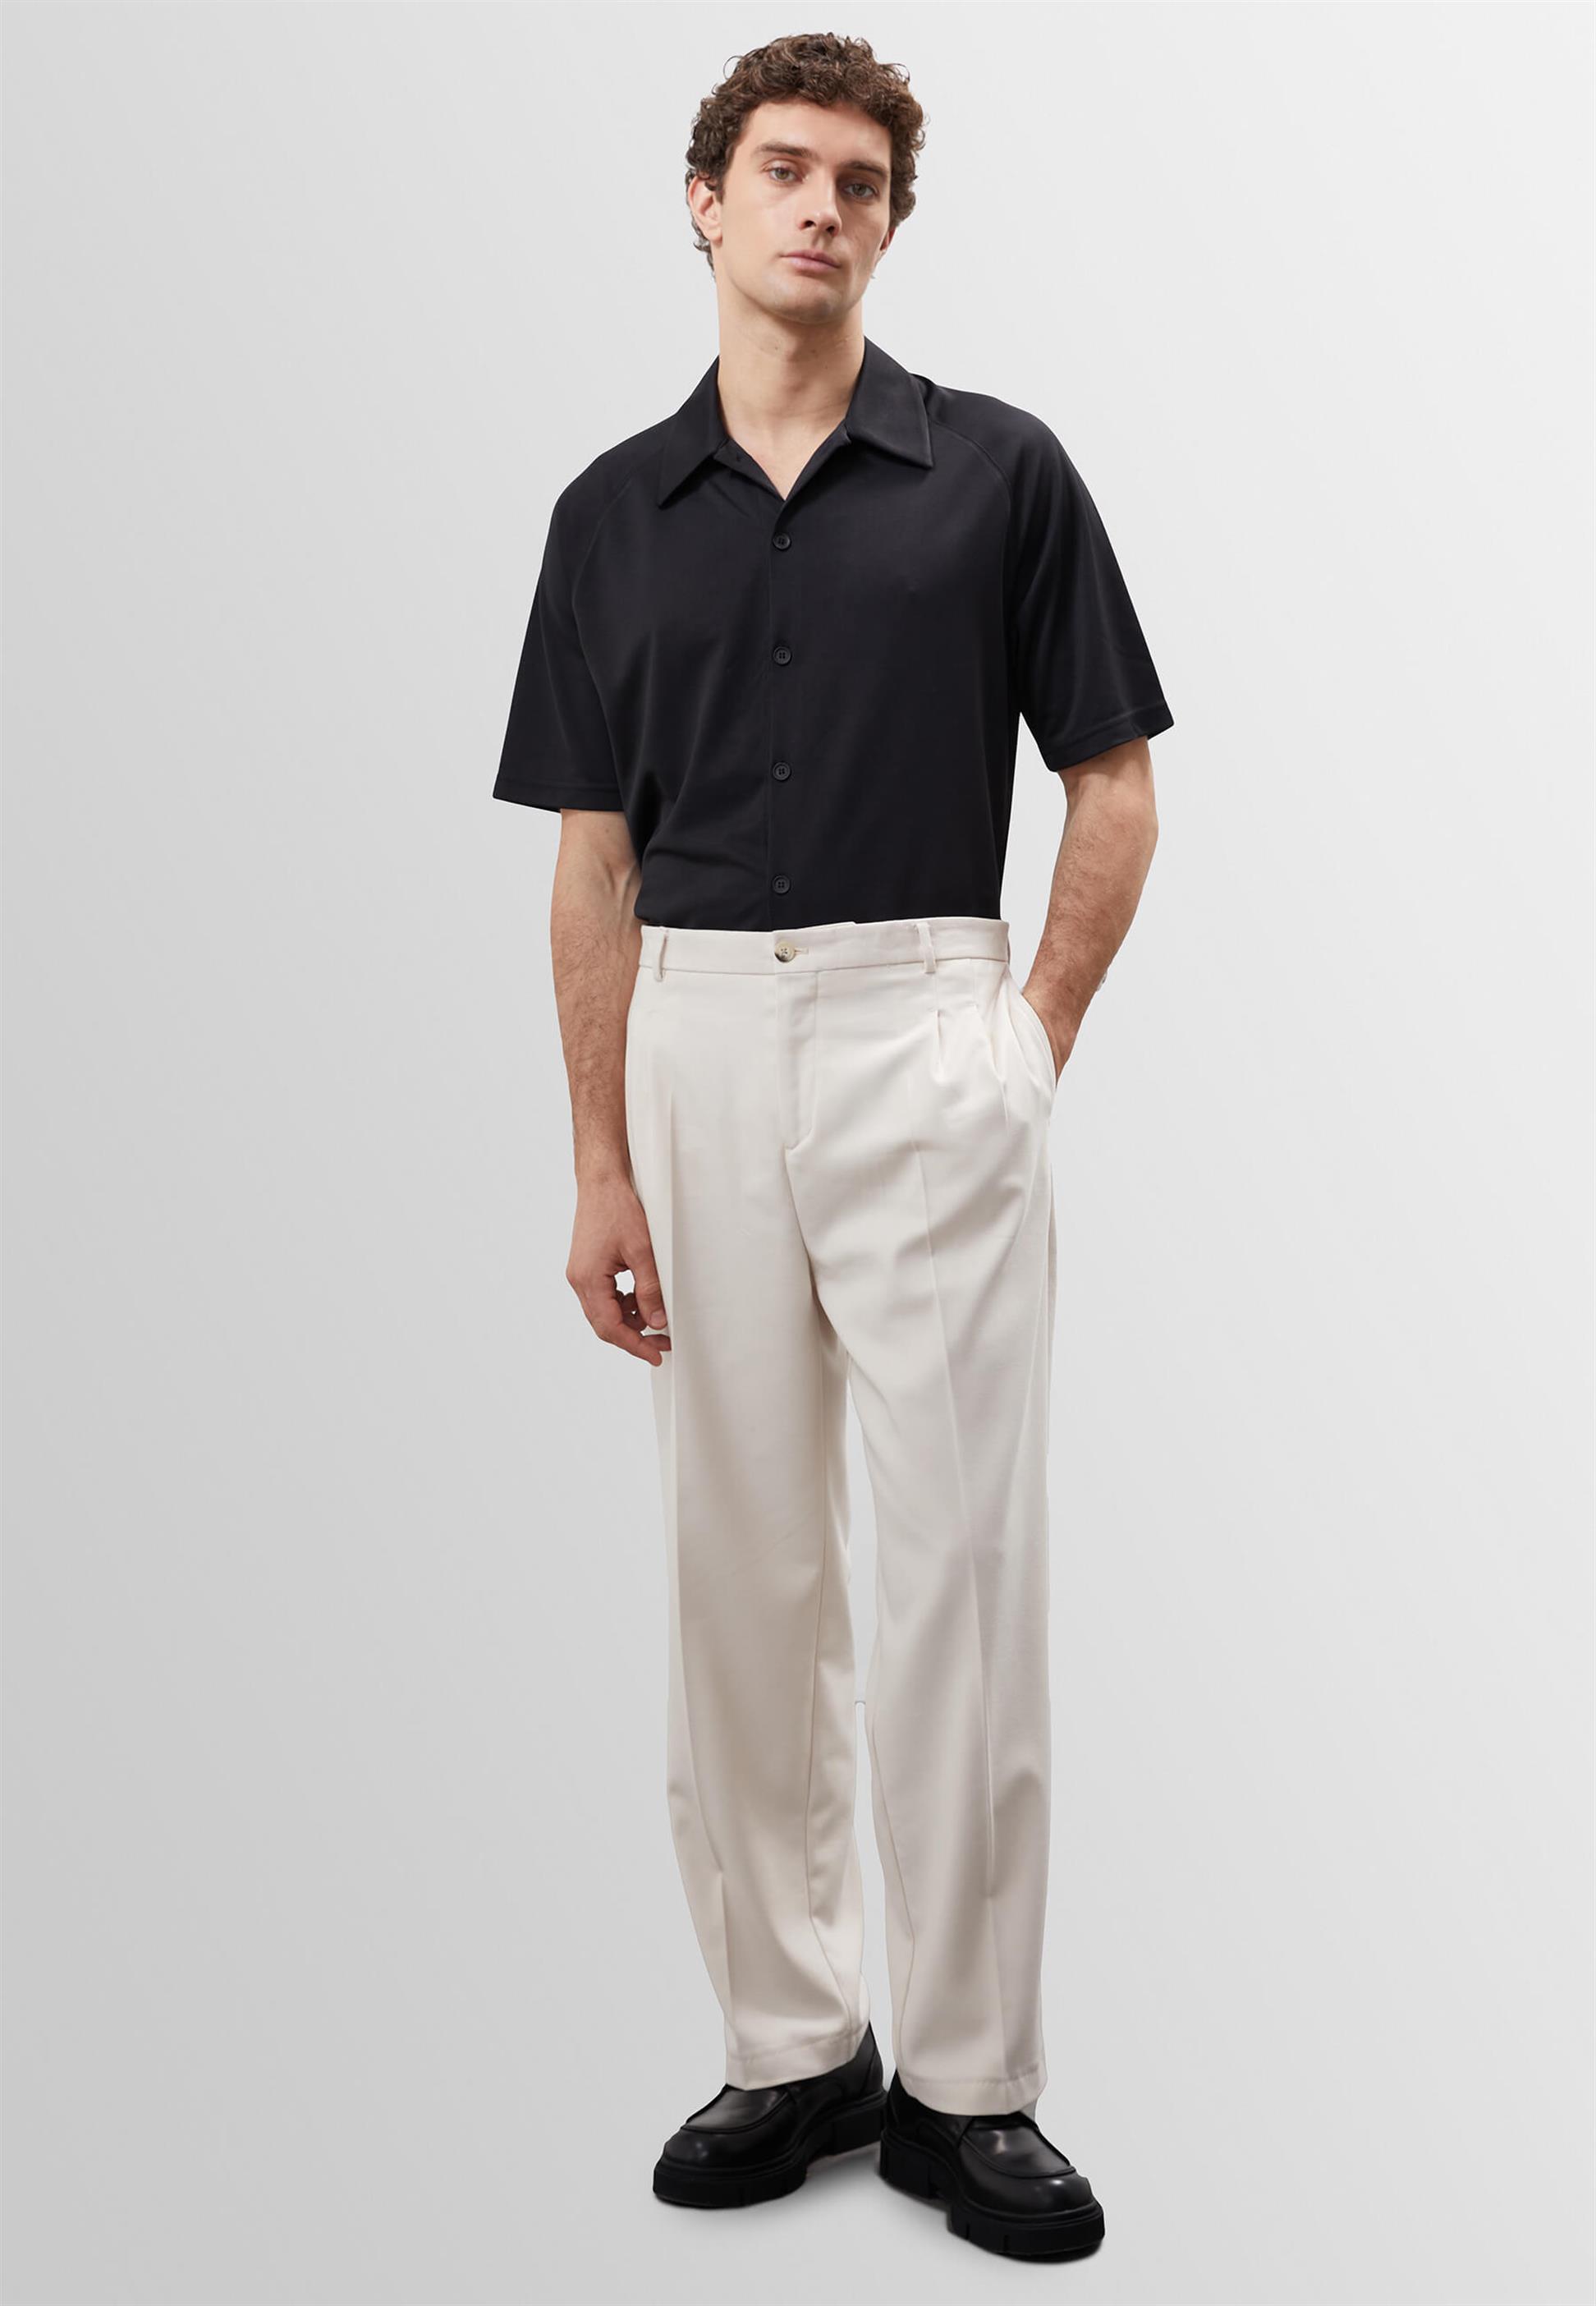 Oversize Short Sleeve Men's Shirt